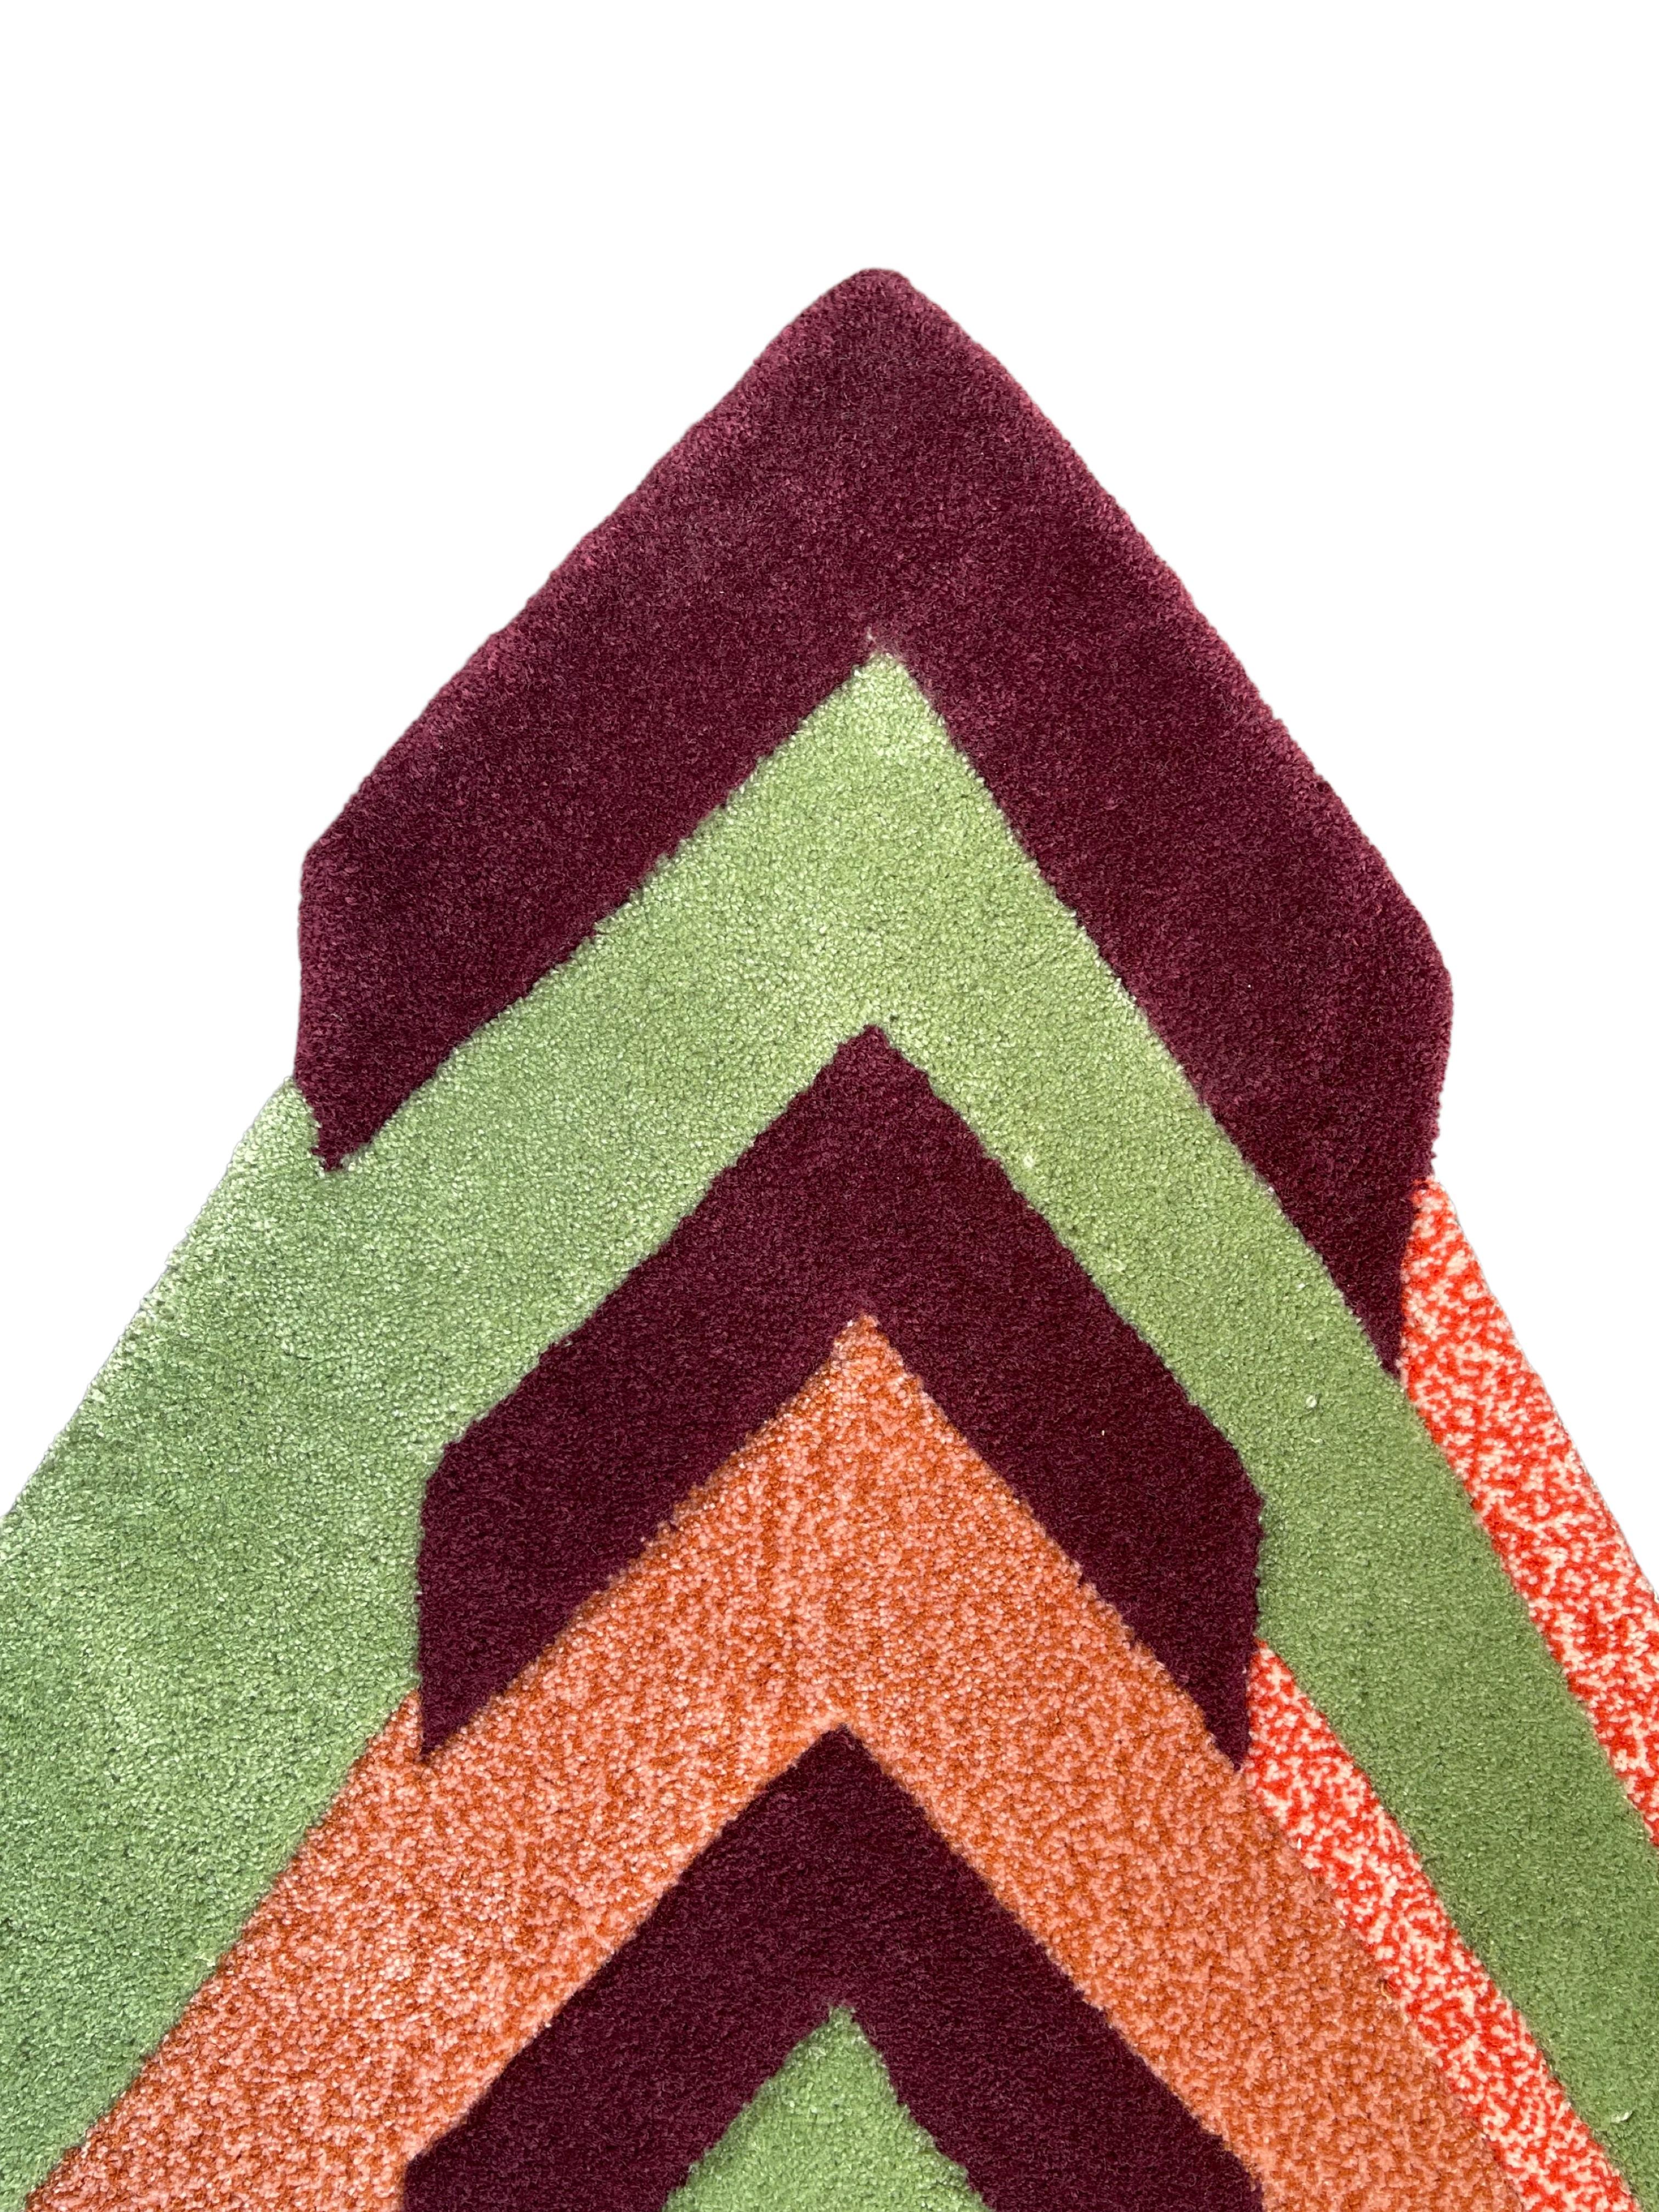 triangle shaped rugs